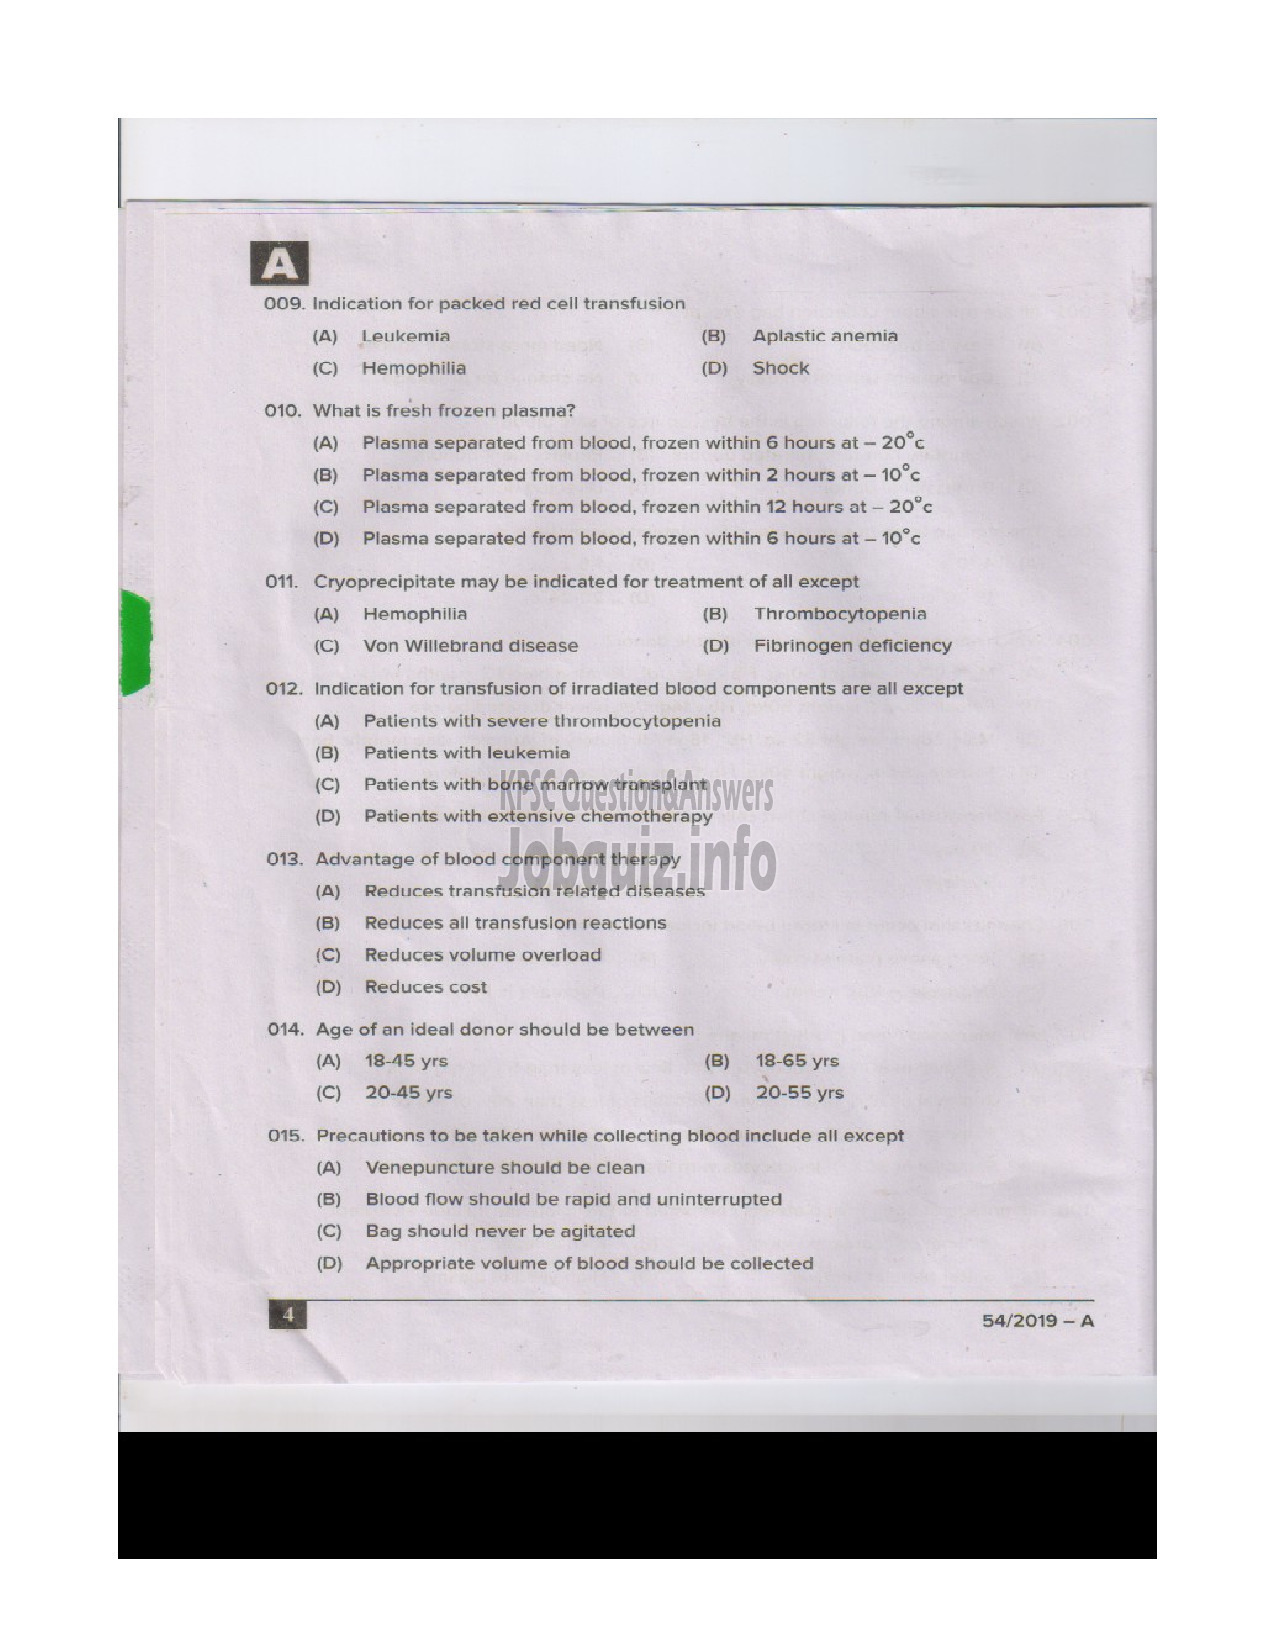 Kerala PSC Question Paper - BLOOD BANK TECHNICIAN HEALTH SERVICES ENGLISH -4